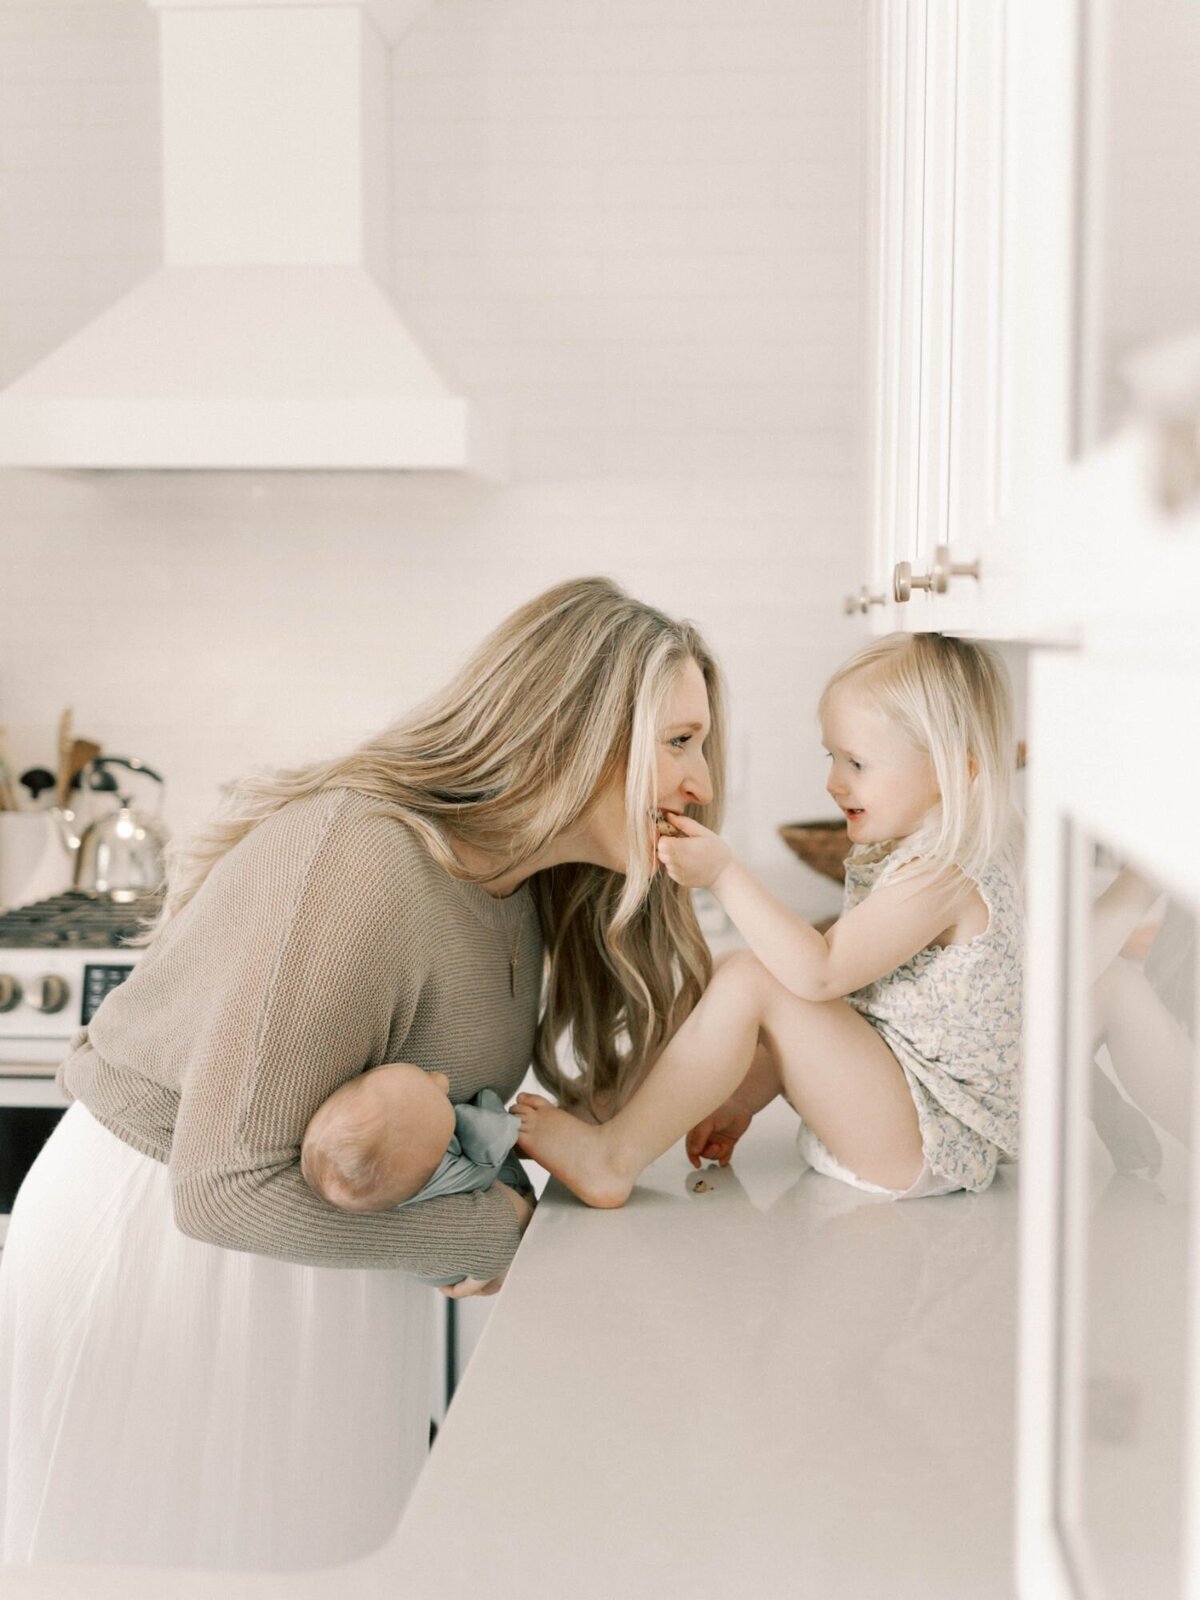 Jacob & Brielle Photography - Motherhood Photography